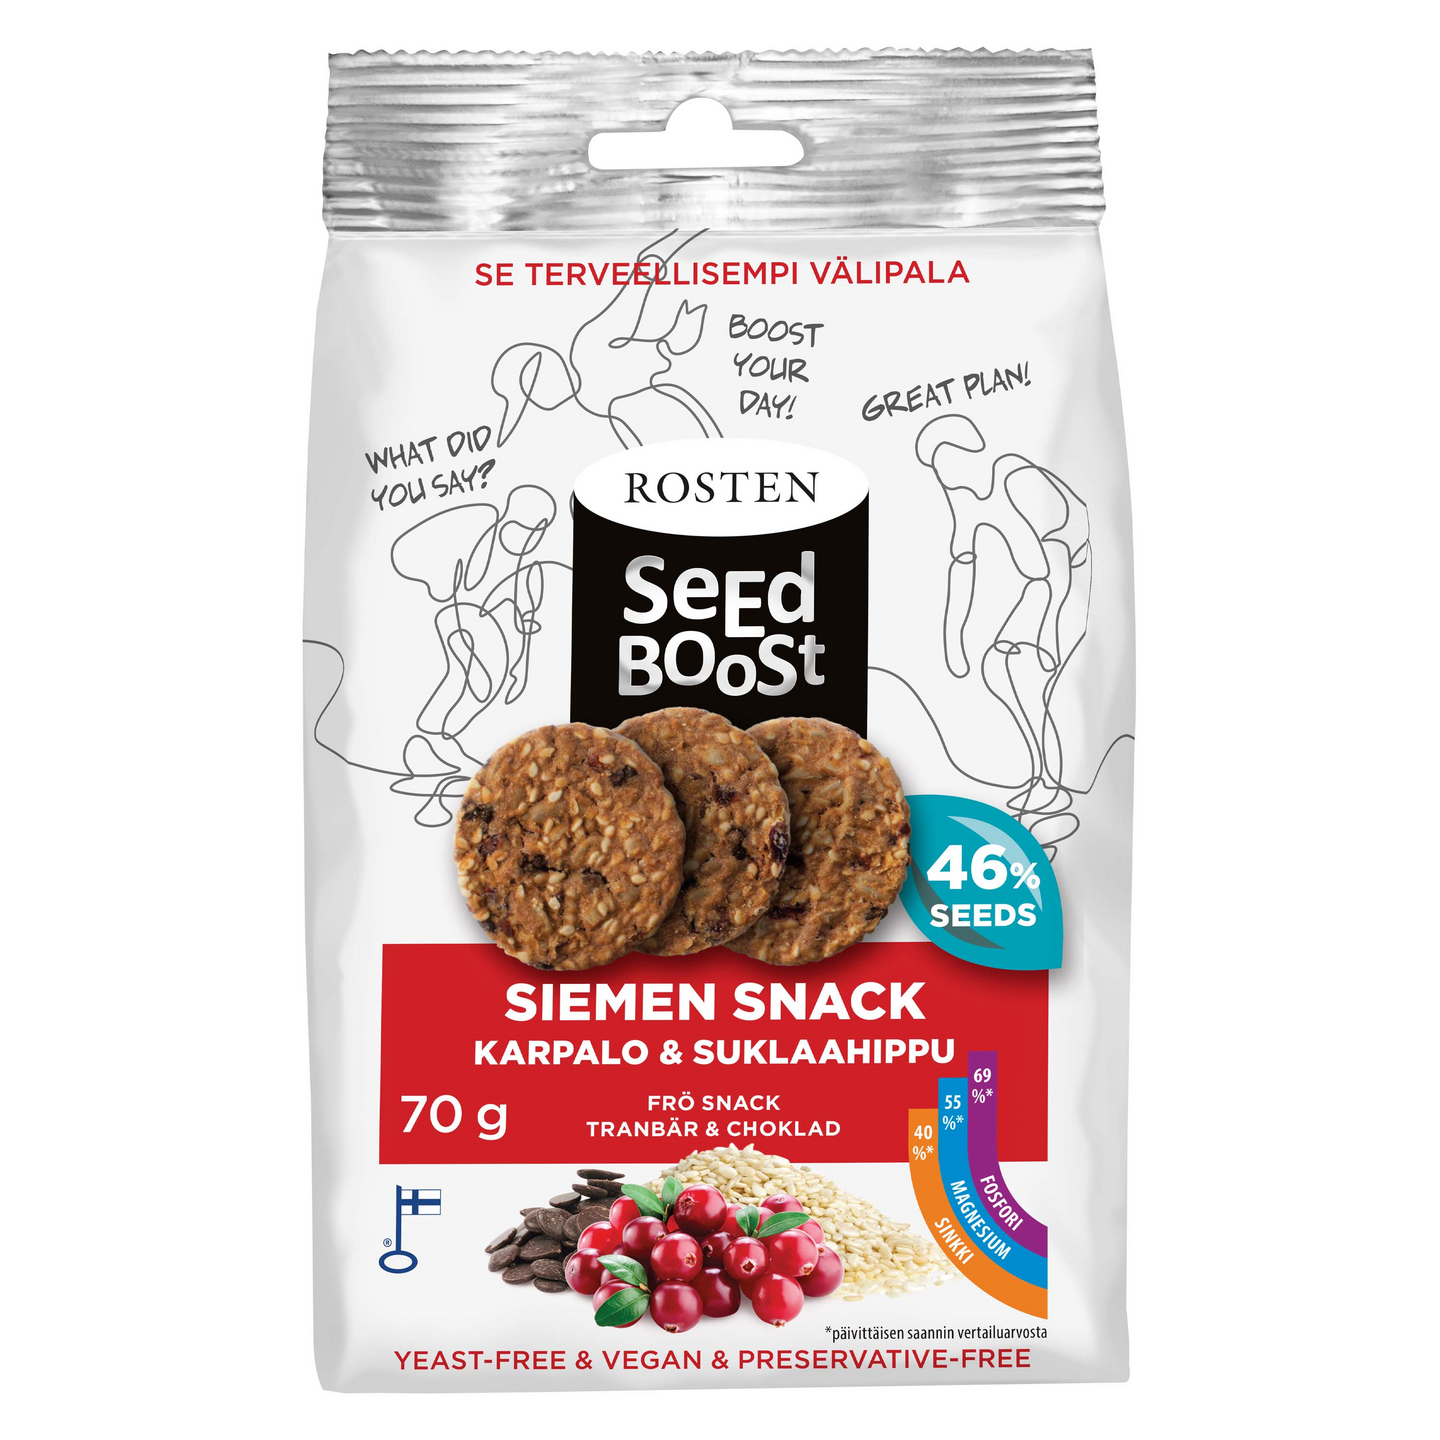 Rosten Seedboost Karpalo-Suklaahippu siemen snack 70 g